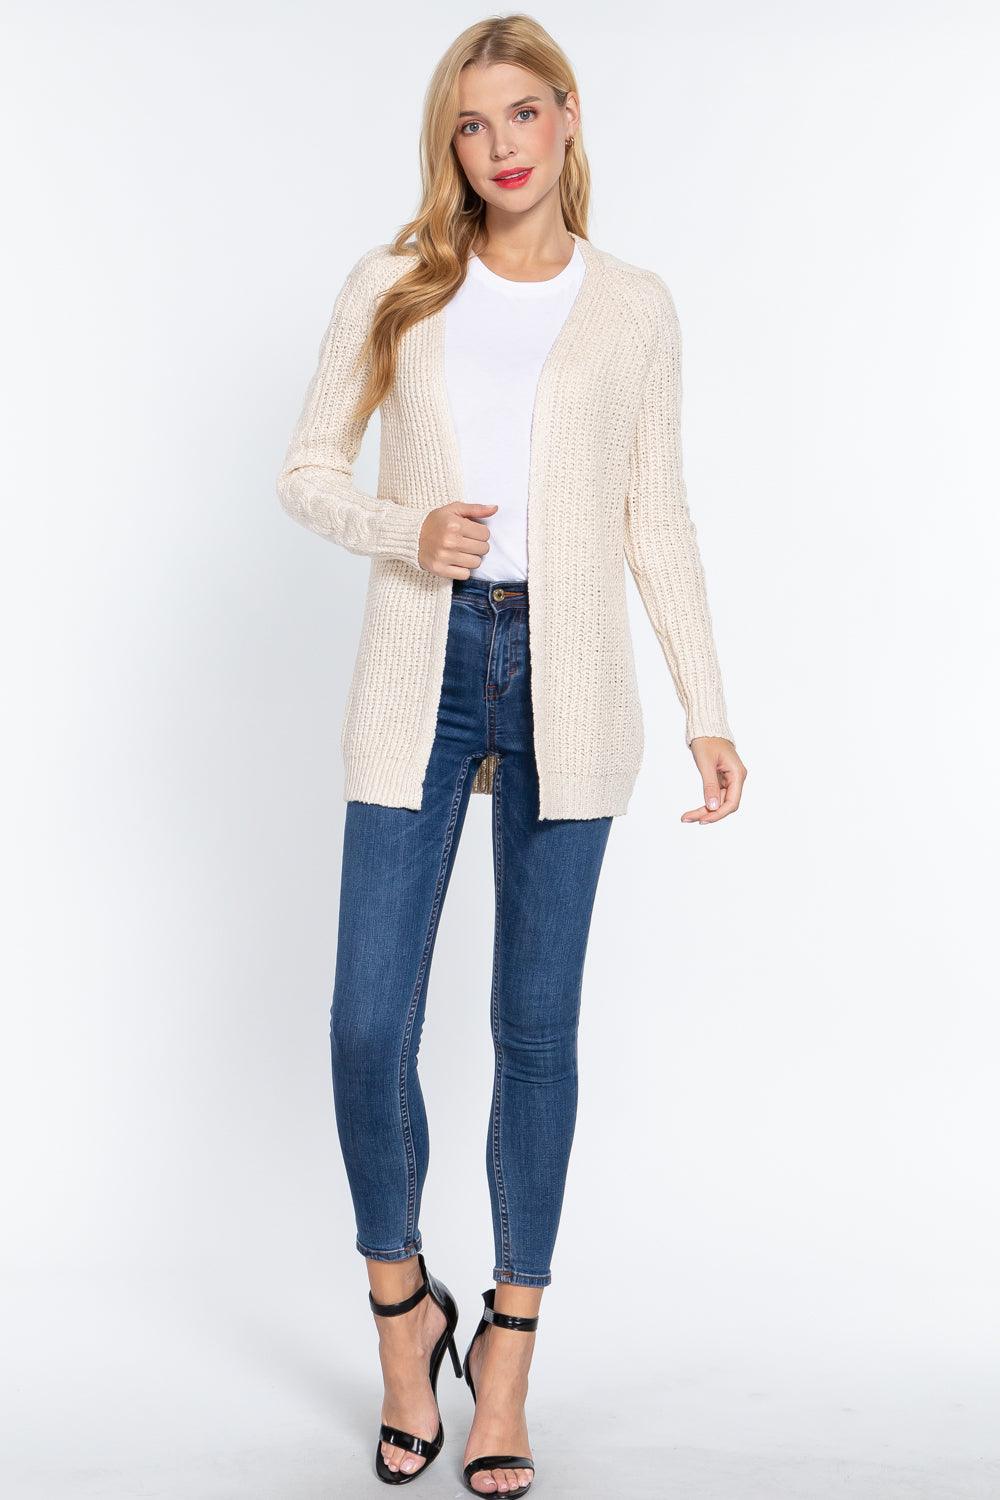 Long Slv Open Front Sweater Cardigan - AMIClubwear